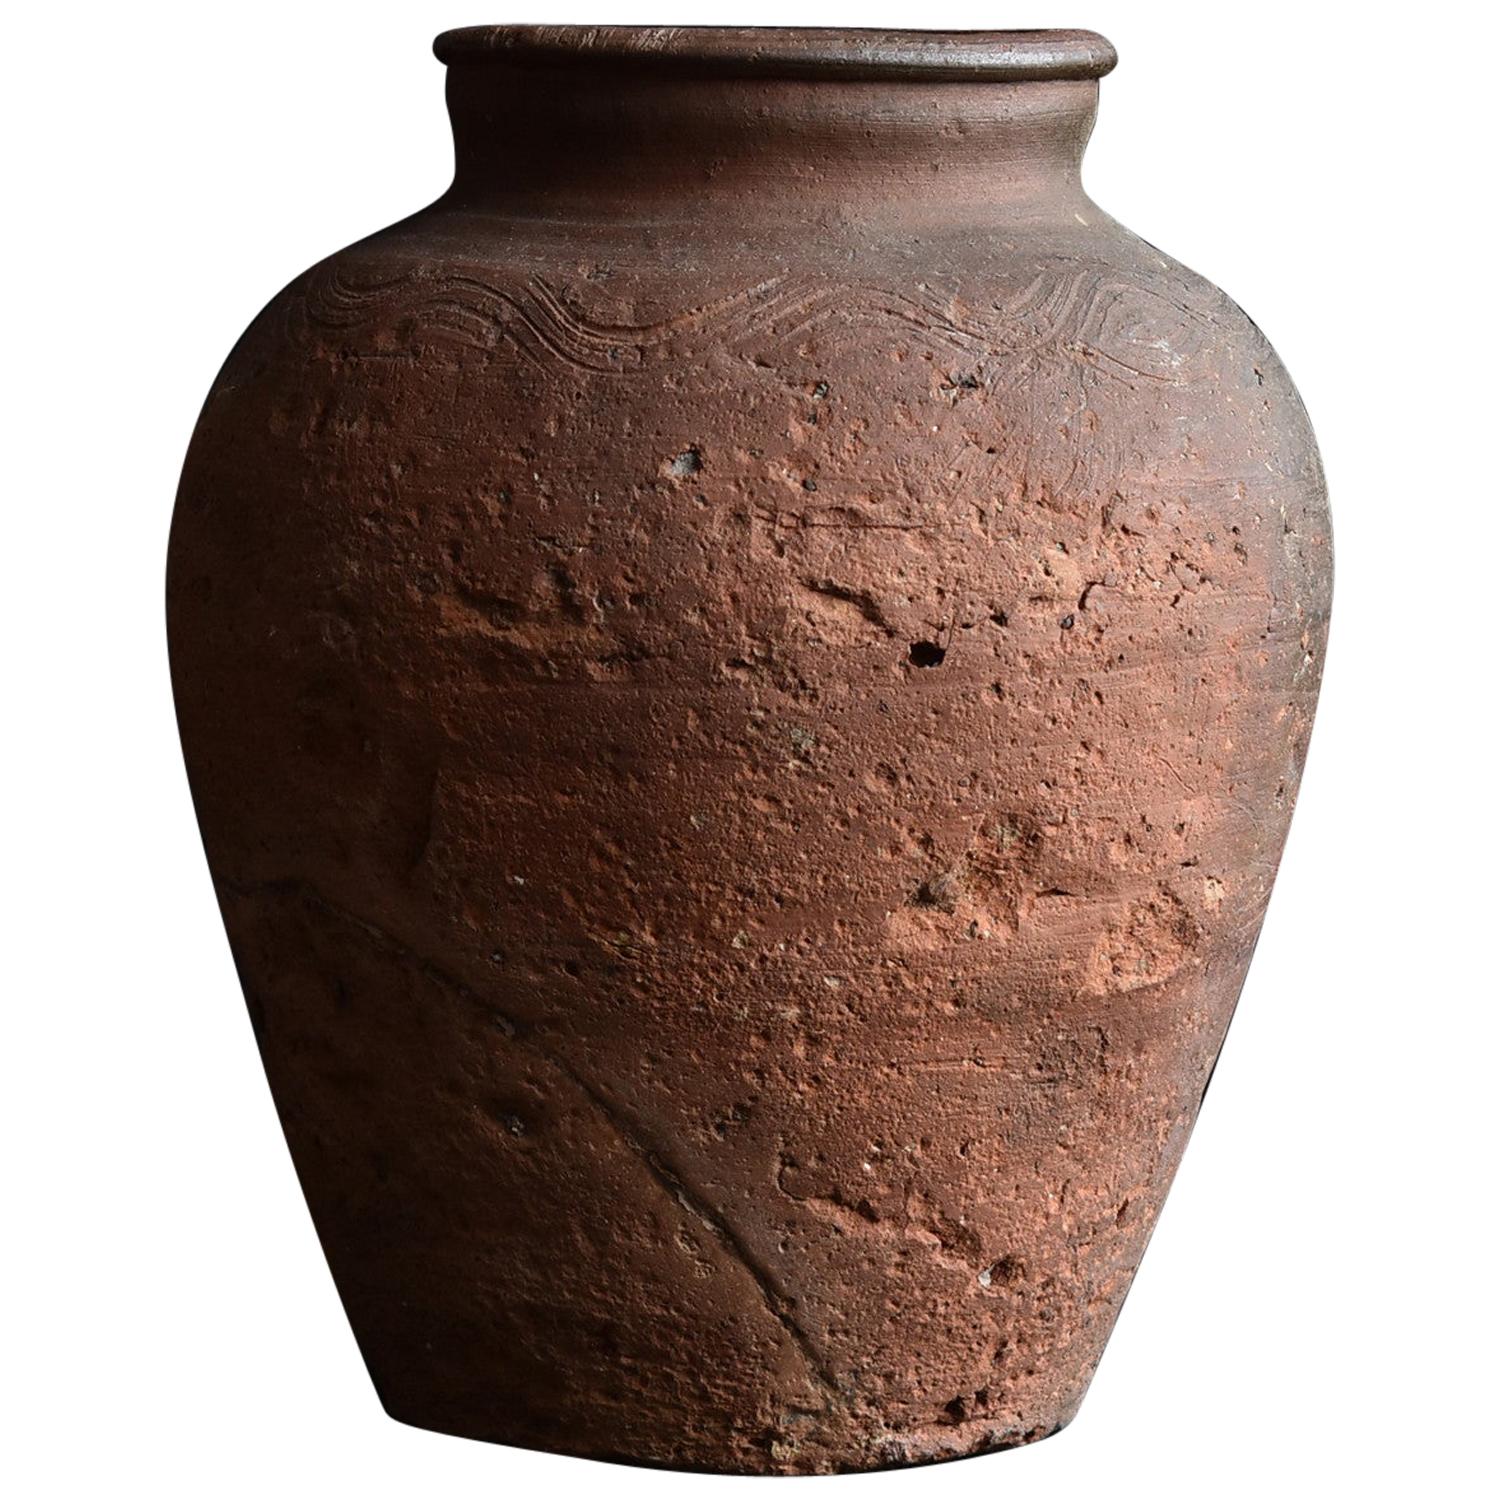 Japanese antique pottery "Bizen" jar around the 14-15th century / old vase